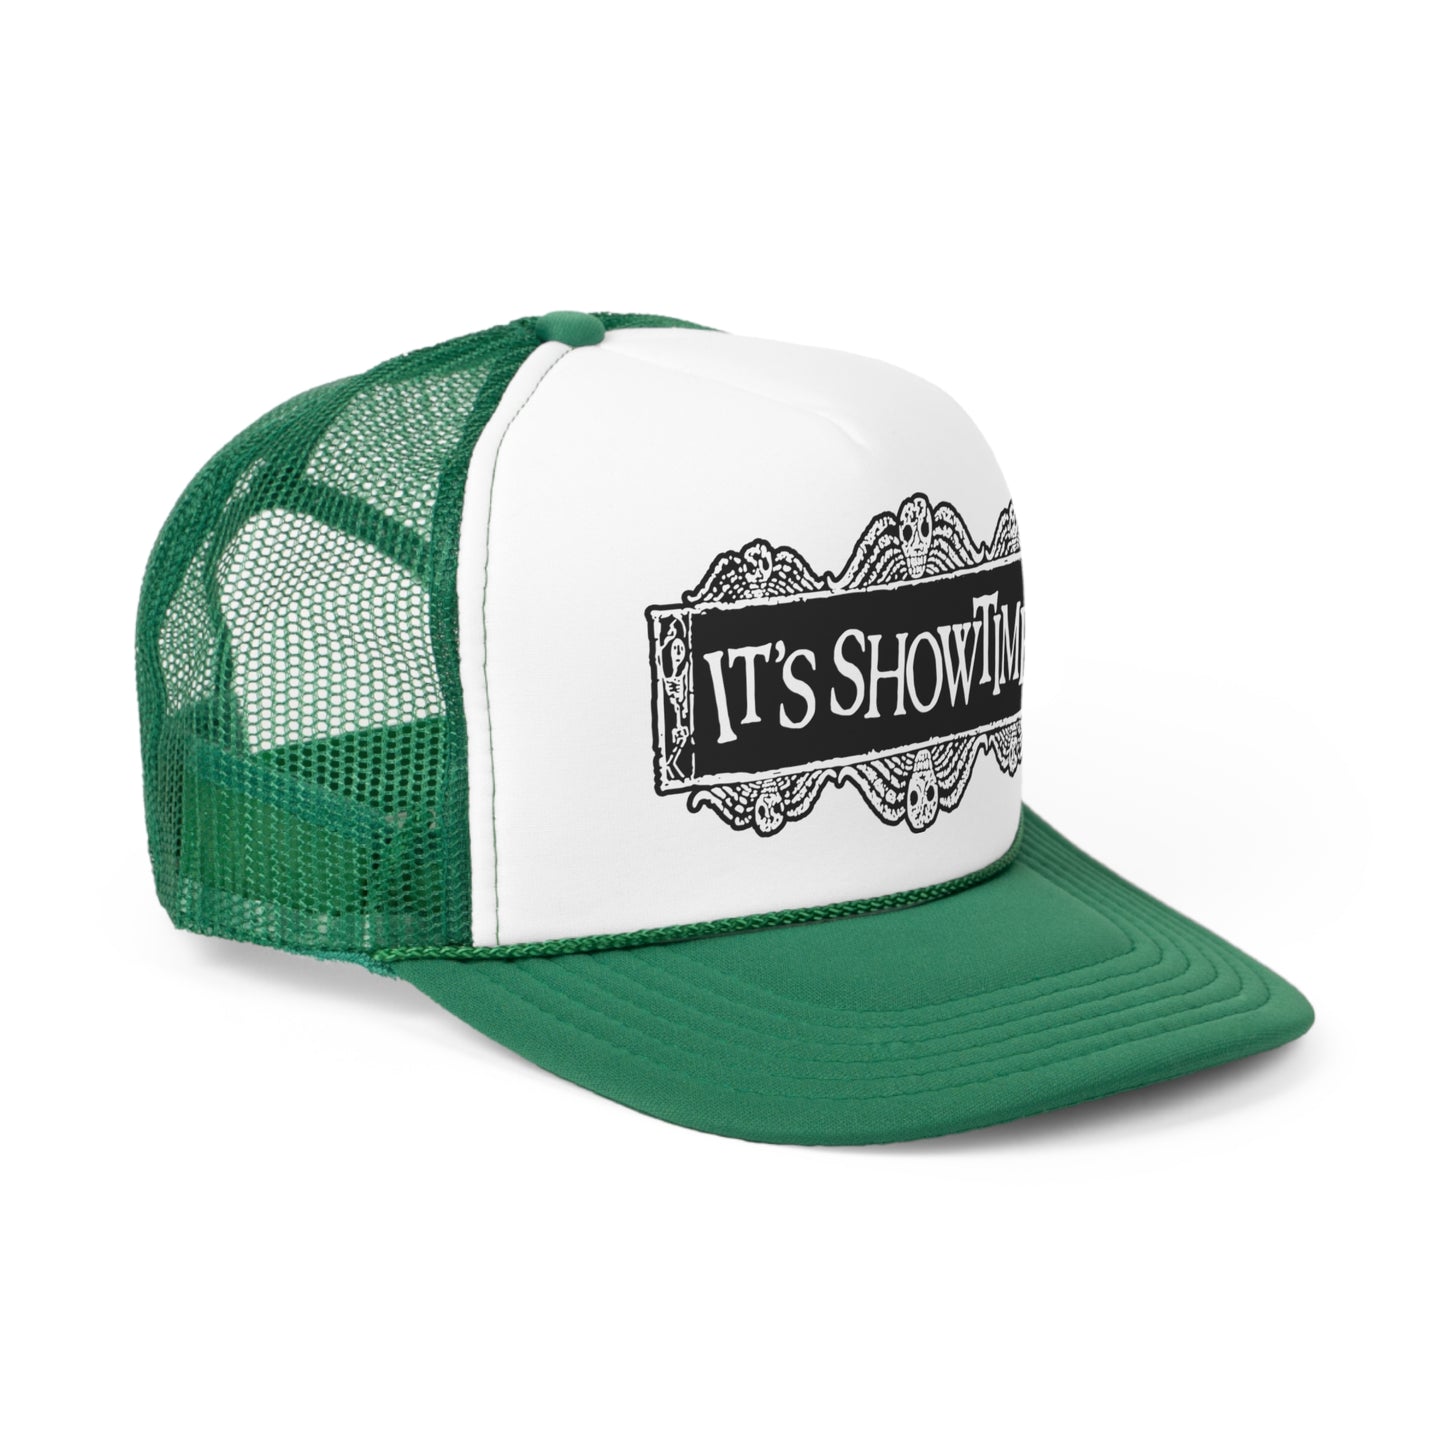 It's Showtime trucker hat